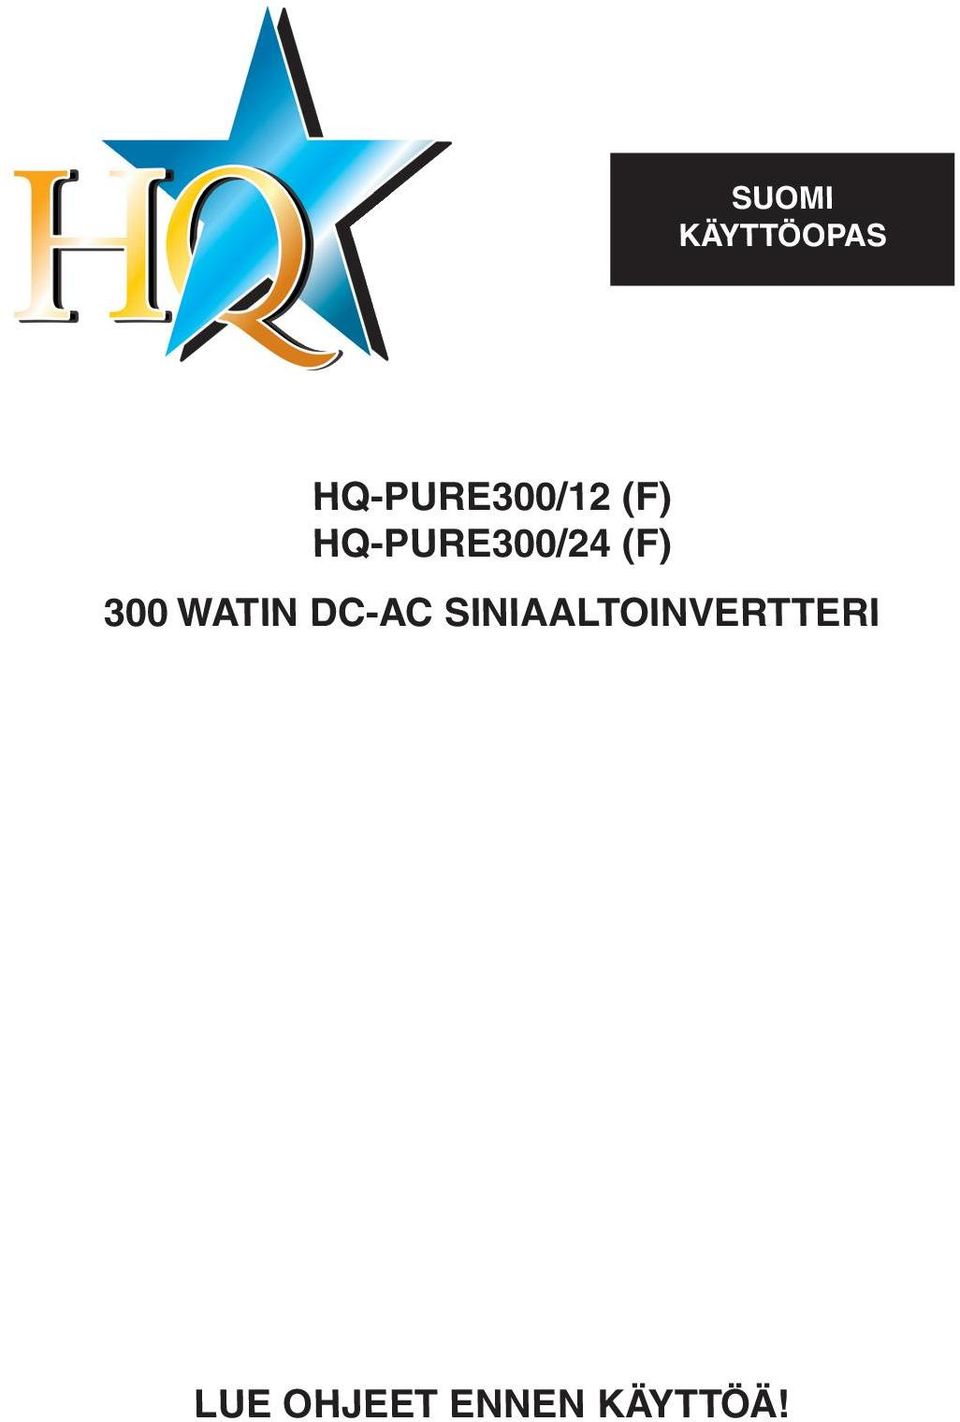 HQ-PURE300/24 (F) 300 WATIN